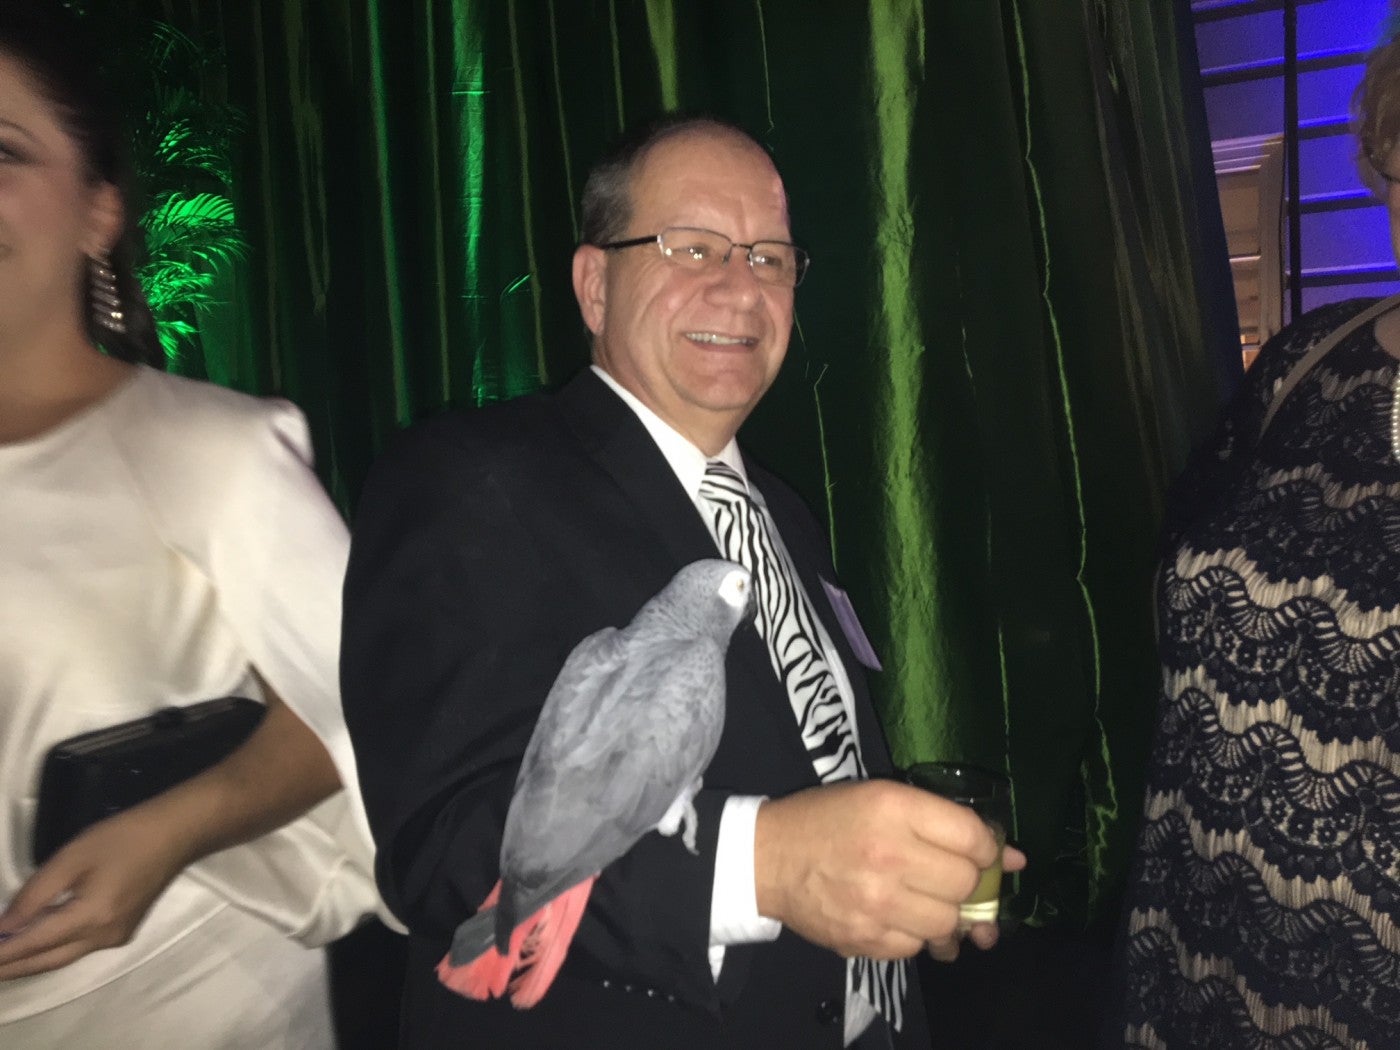 Steven J. Sarro at the 2018 gala holding a bird